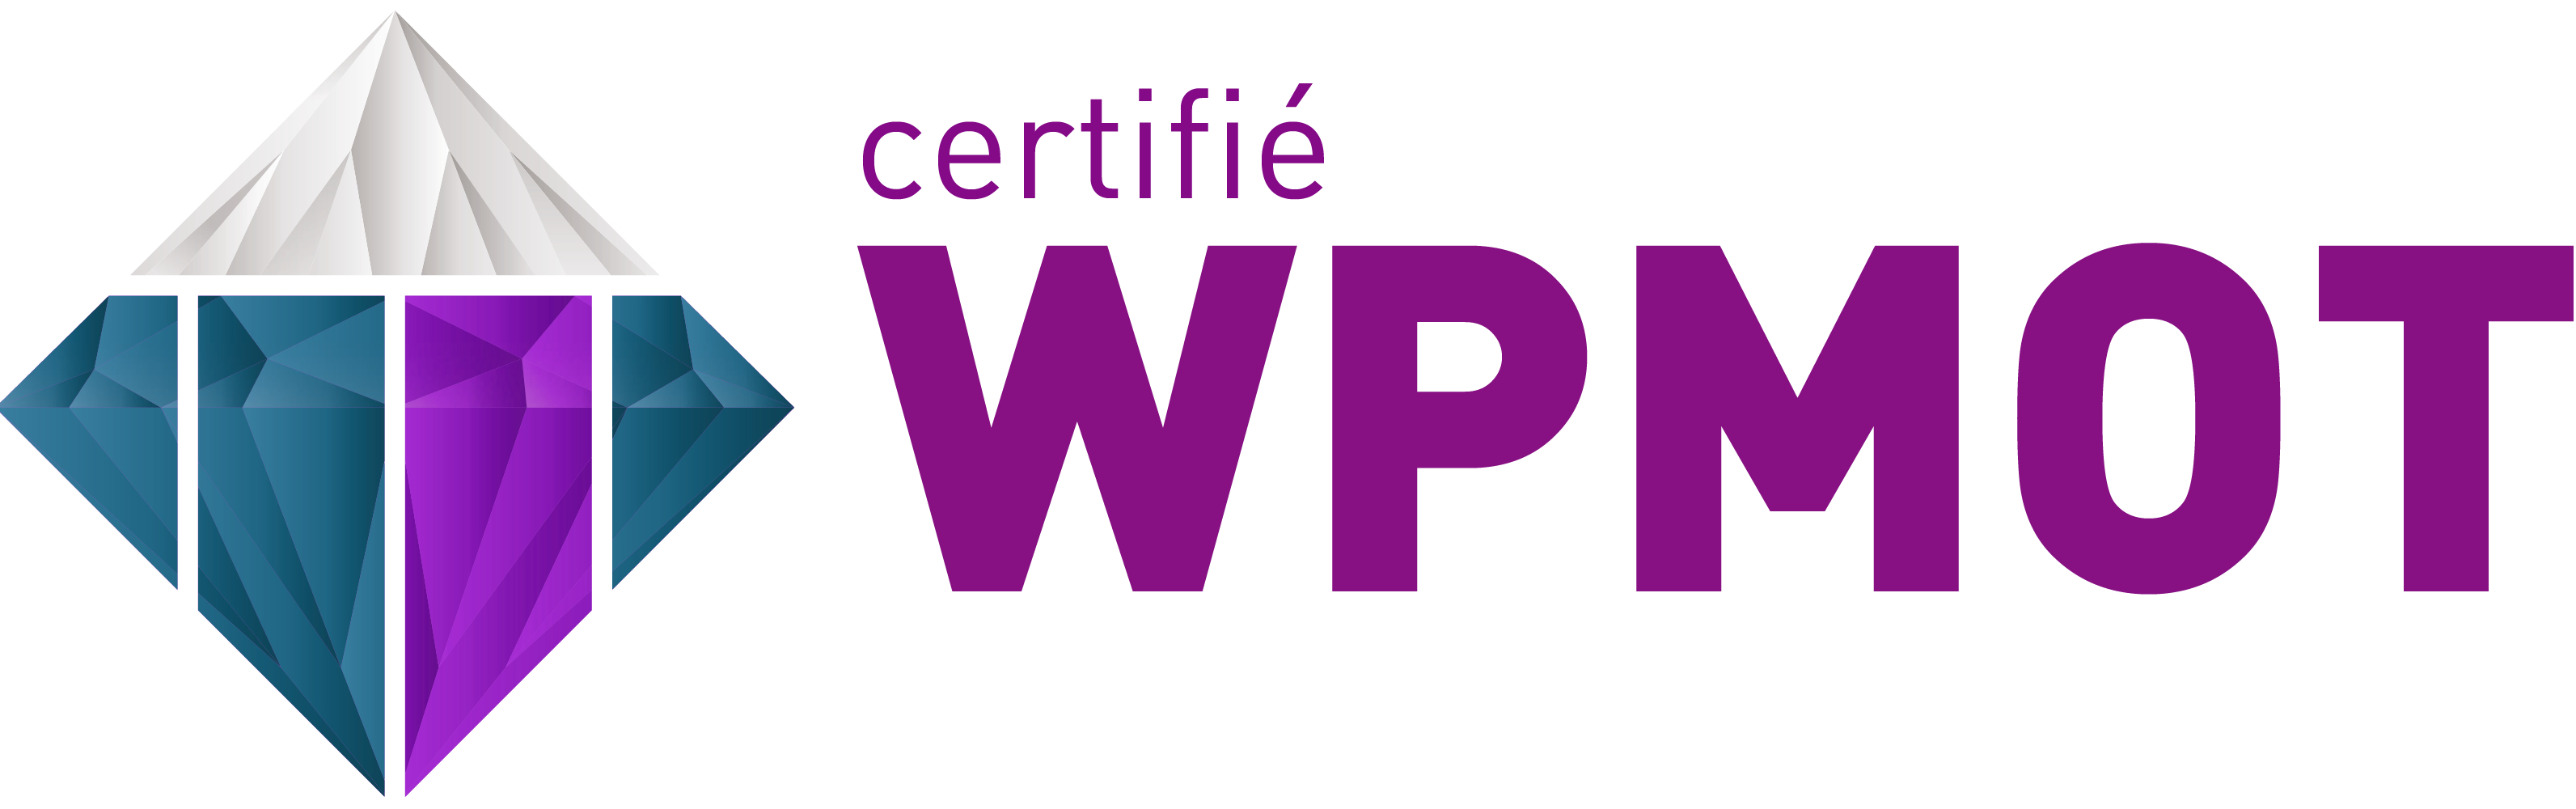 Logo certifié WPMOT